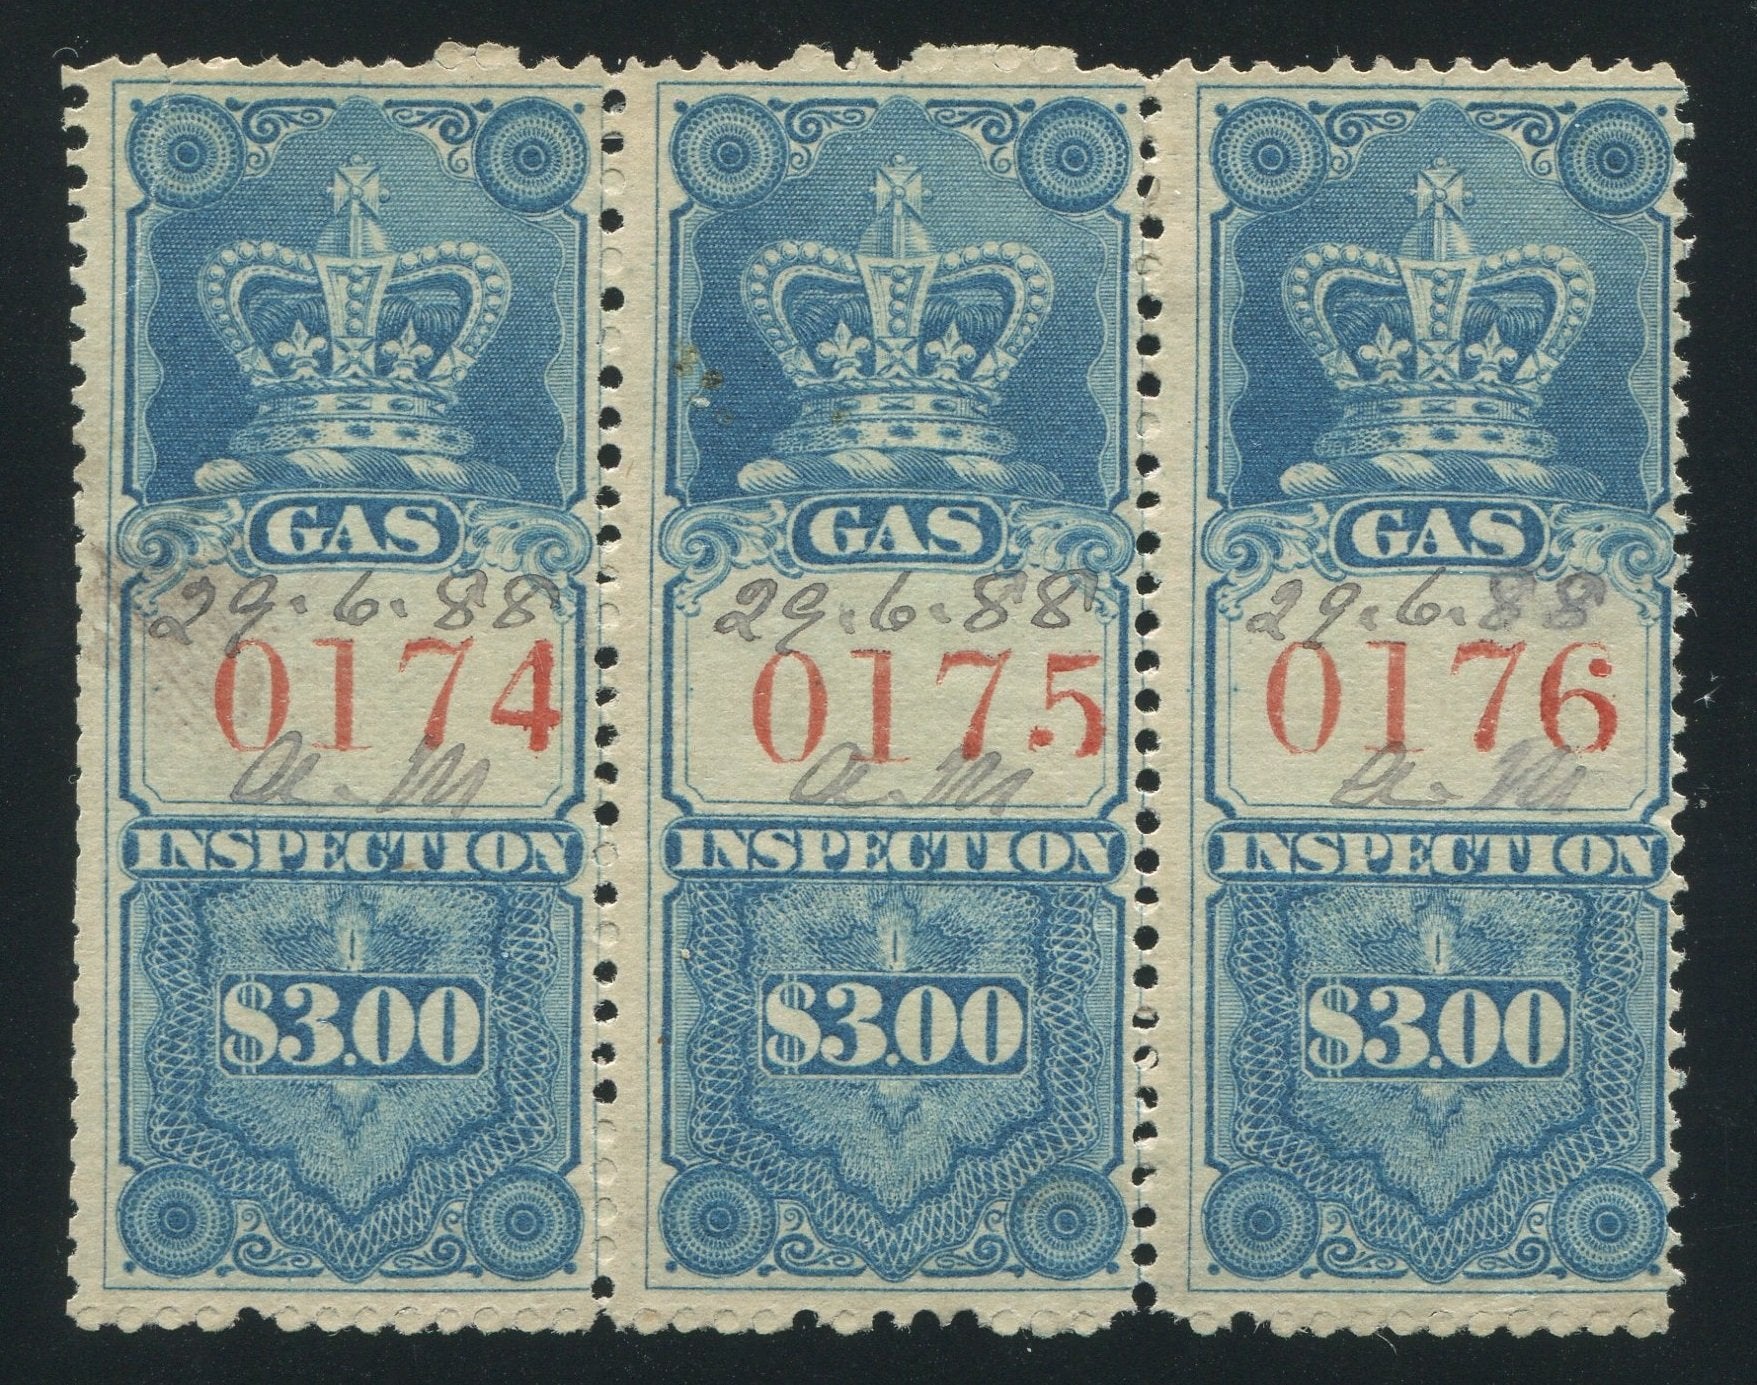 0006FG1709 - FG6 - Used Stip of 3 - Deveney Stamps Ltd. Canadian Stamps